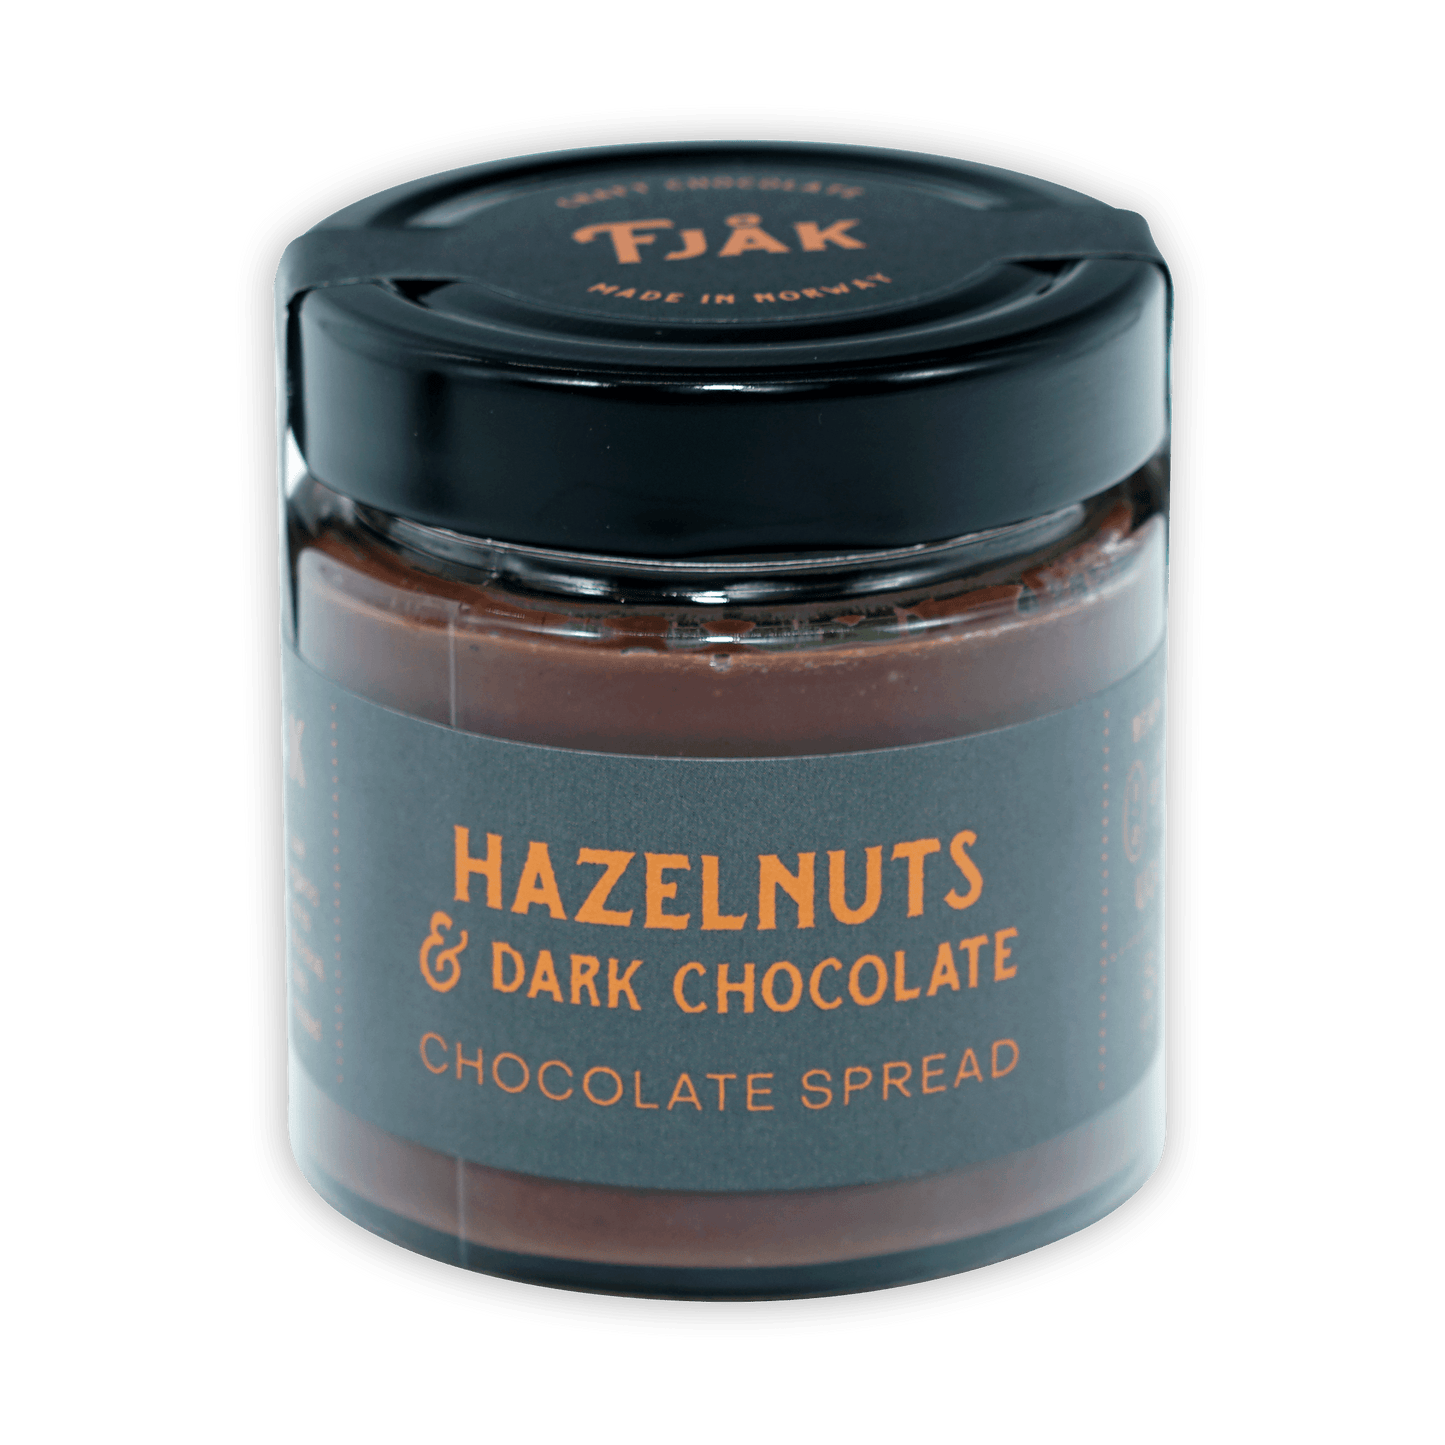 Fjåk Chocolate Spread Hazelnut & Dark Chocolate